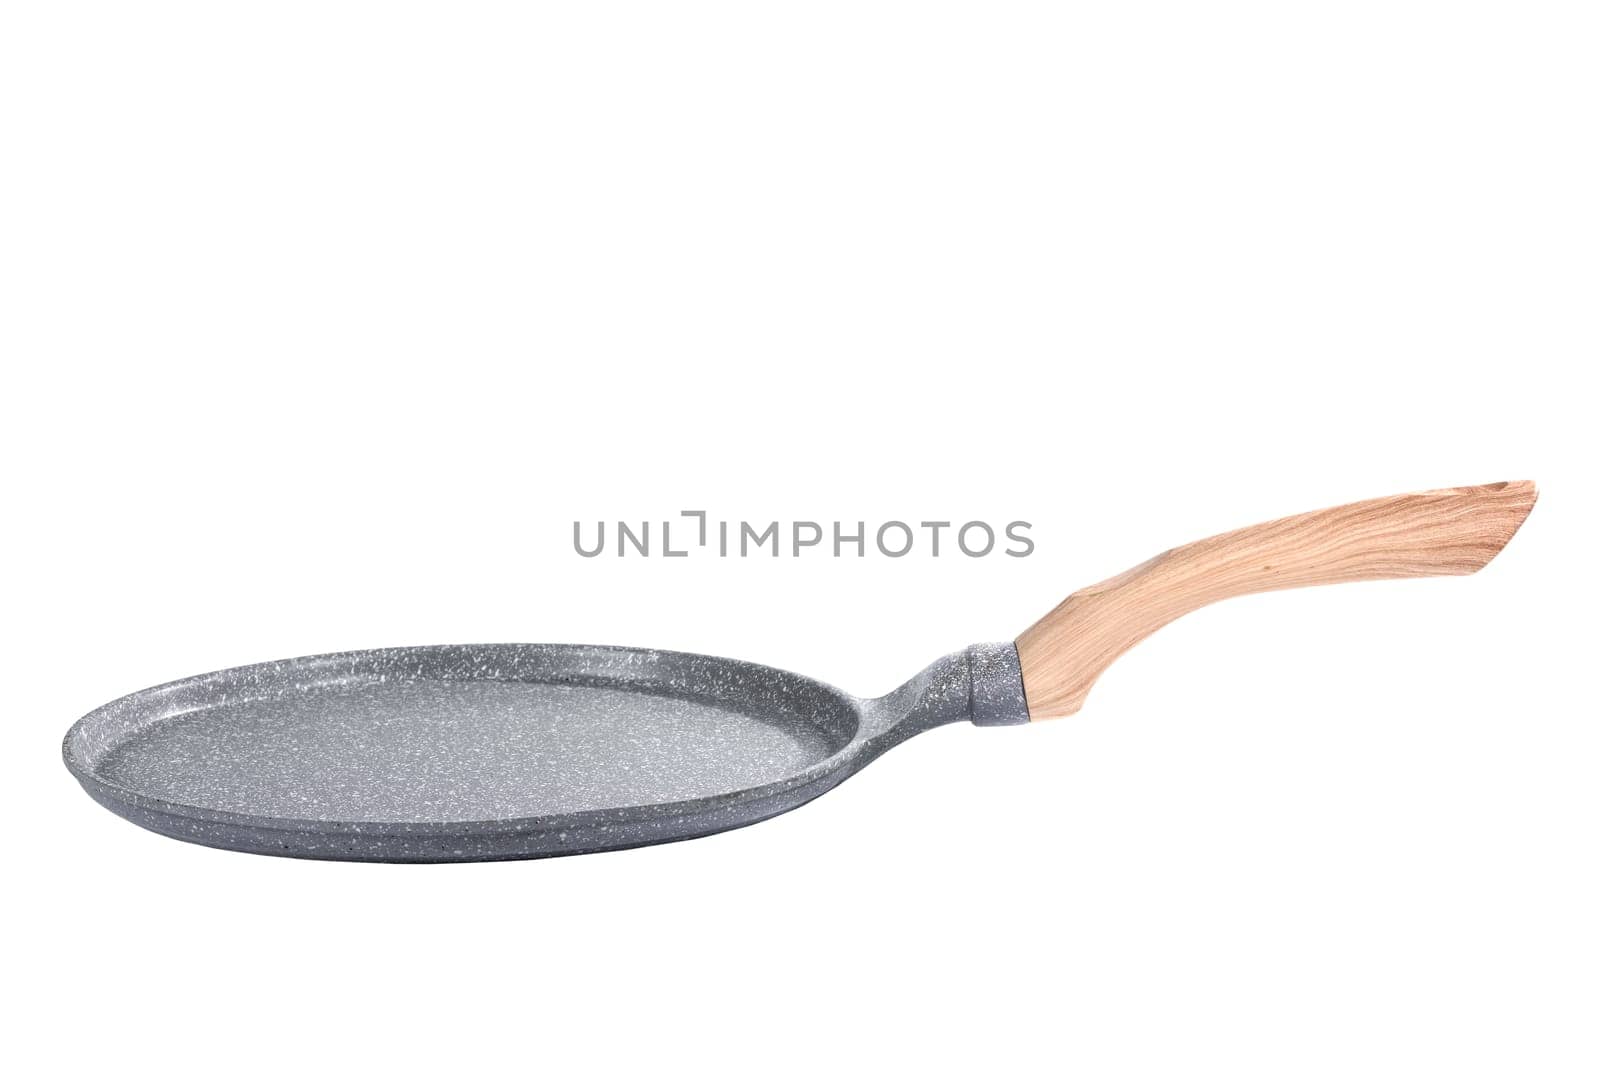 Round cast-iron pancake frying pan isolated on white.